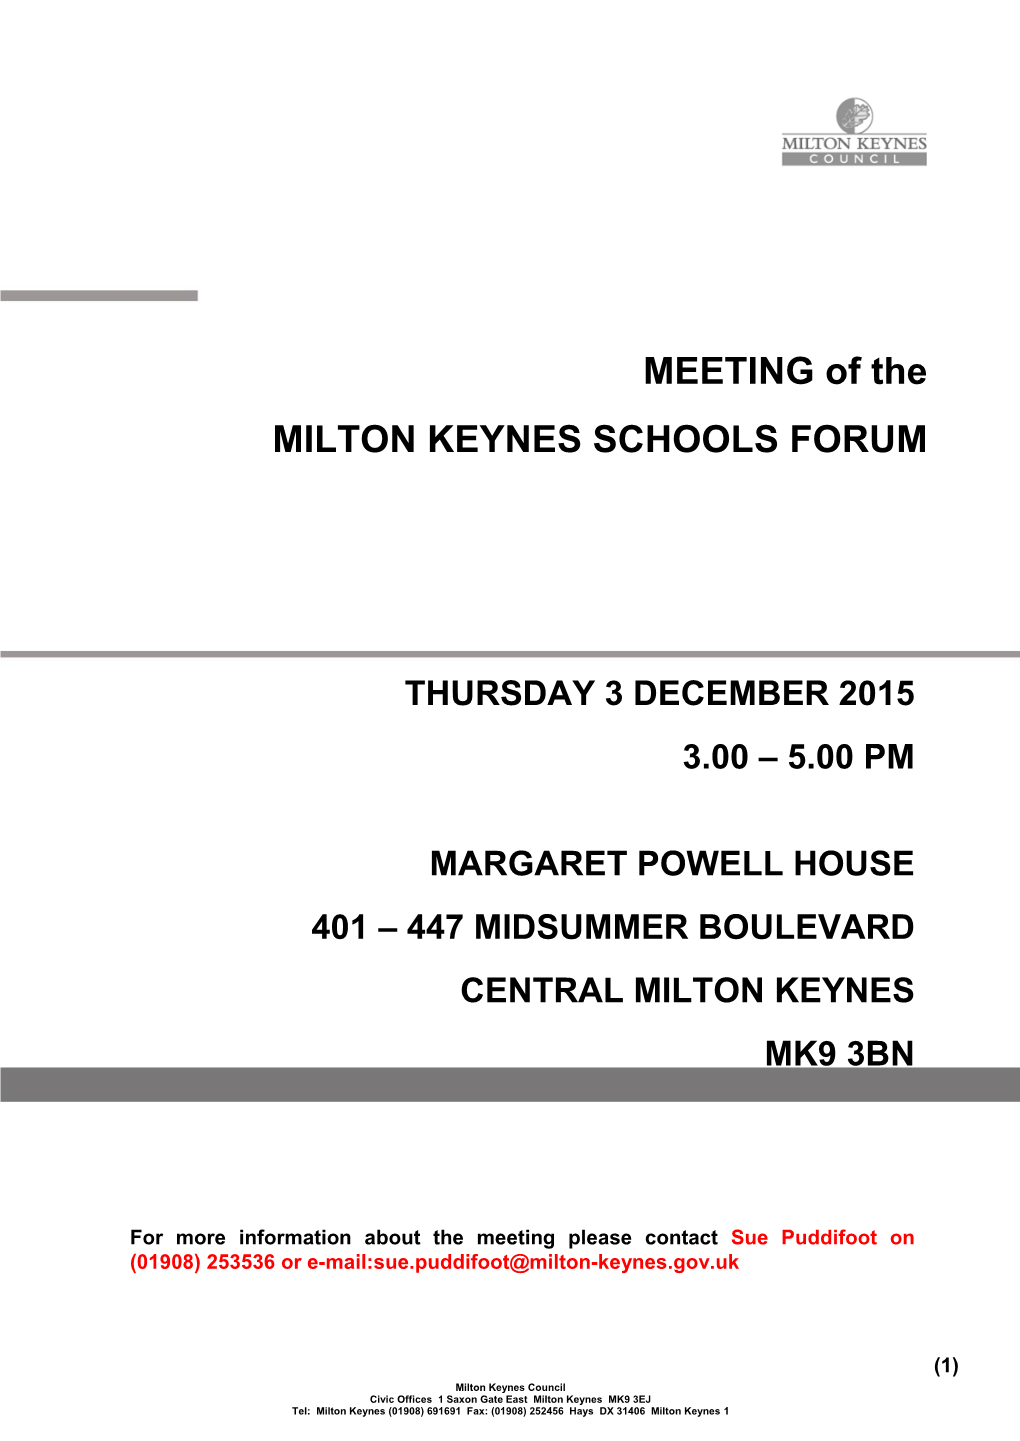 AGENDA MEETING of the MILTON KEYNES SCHOOLS FORUM